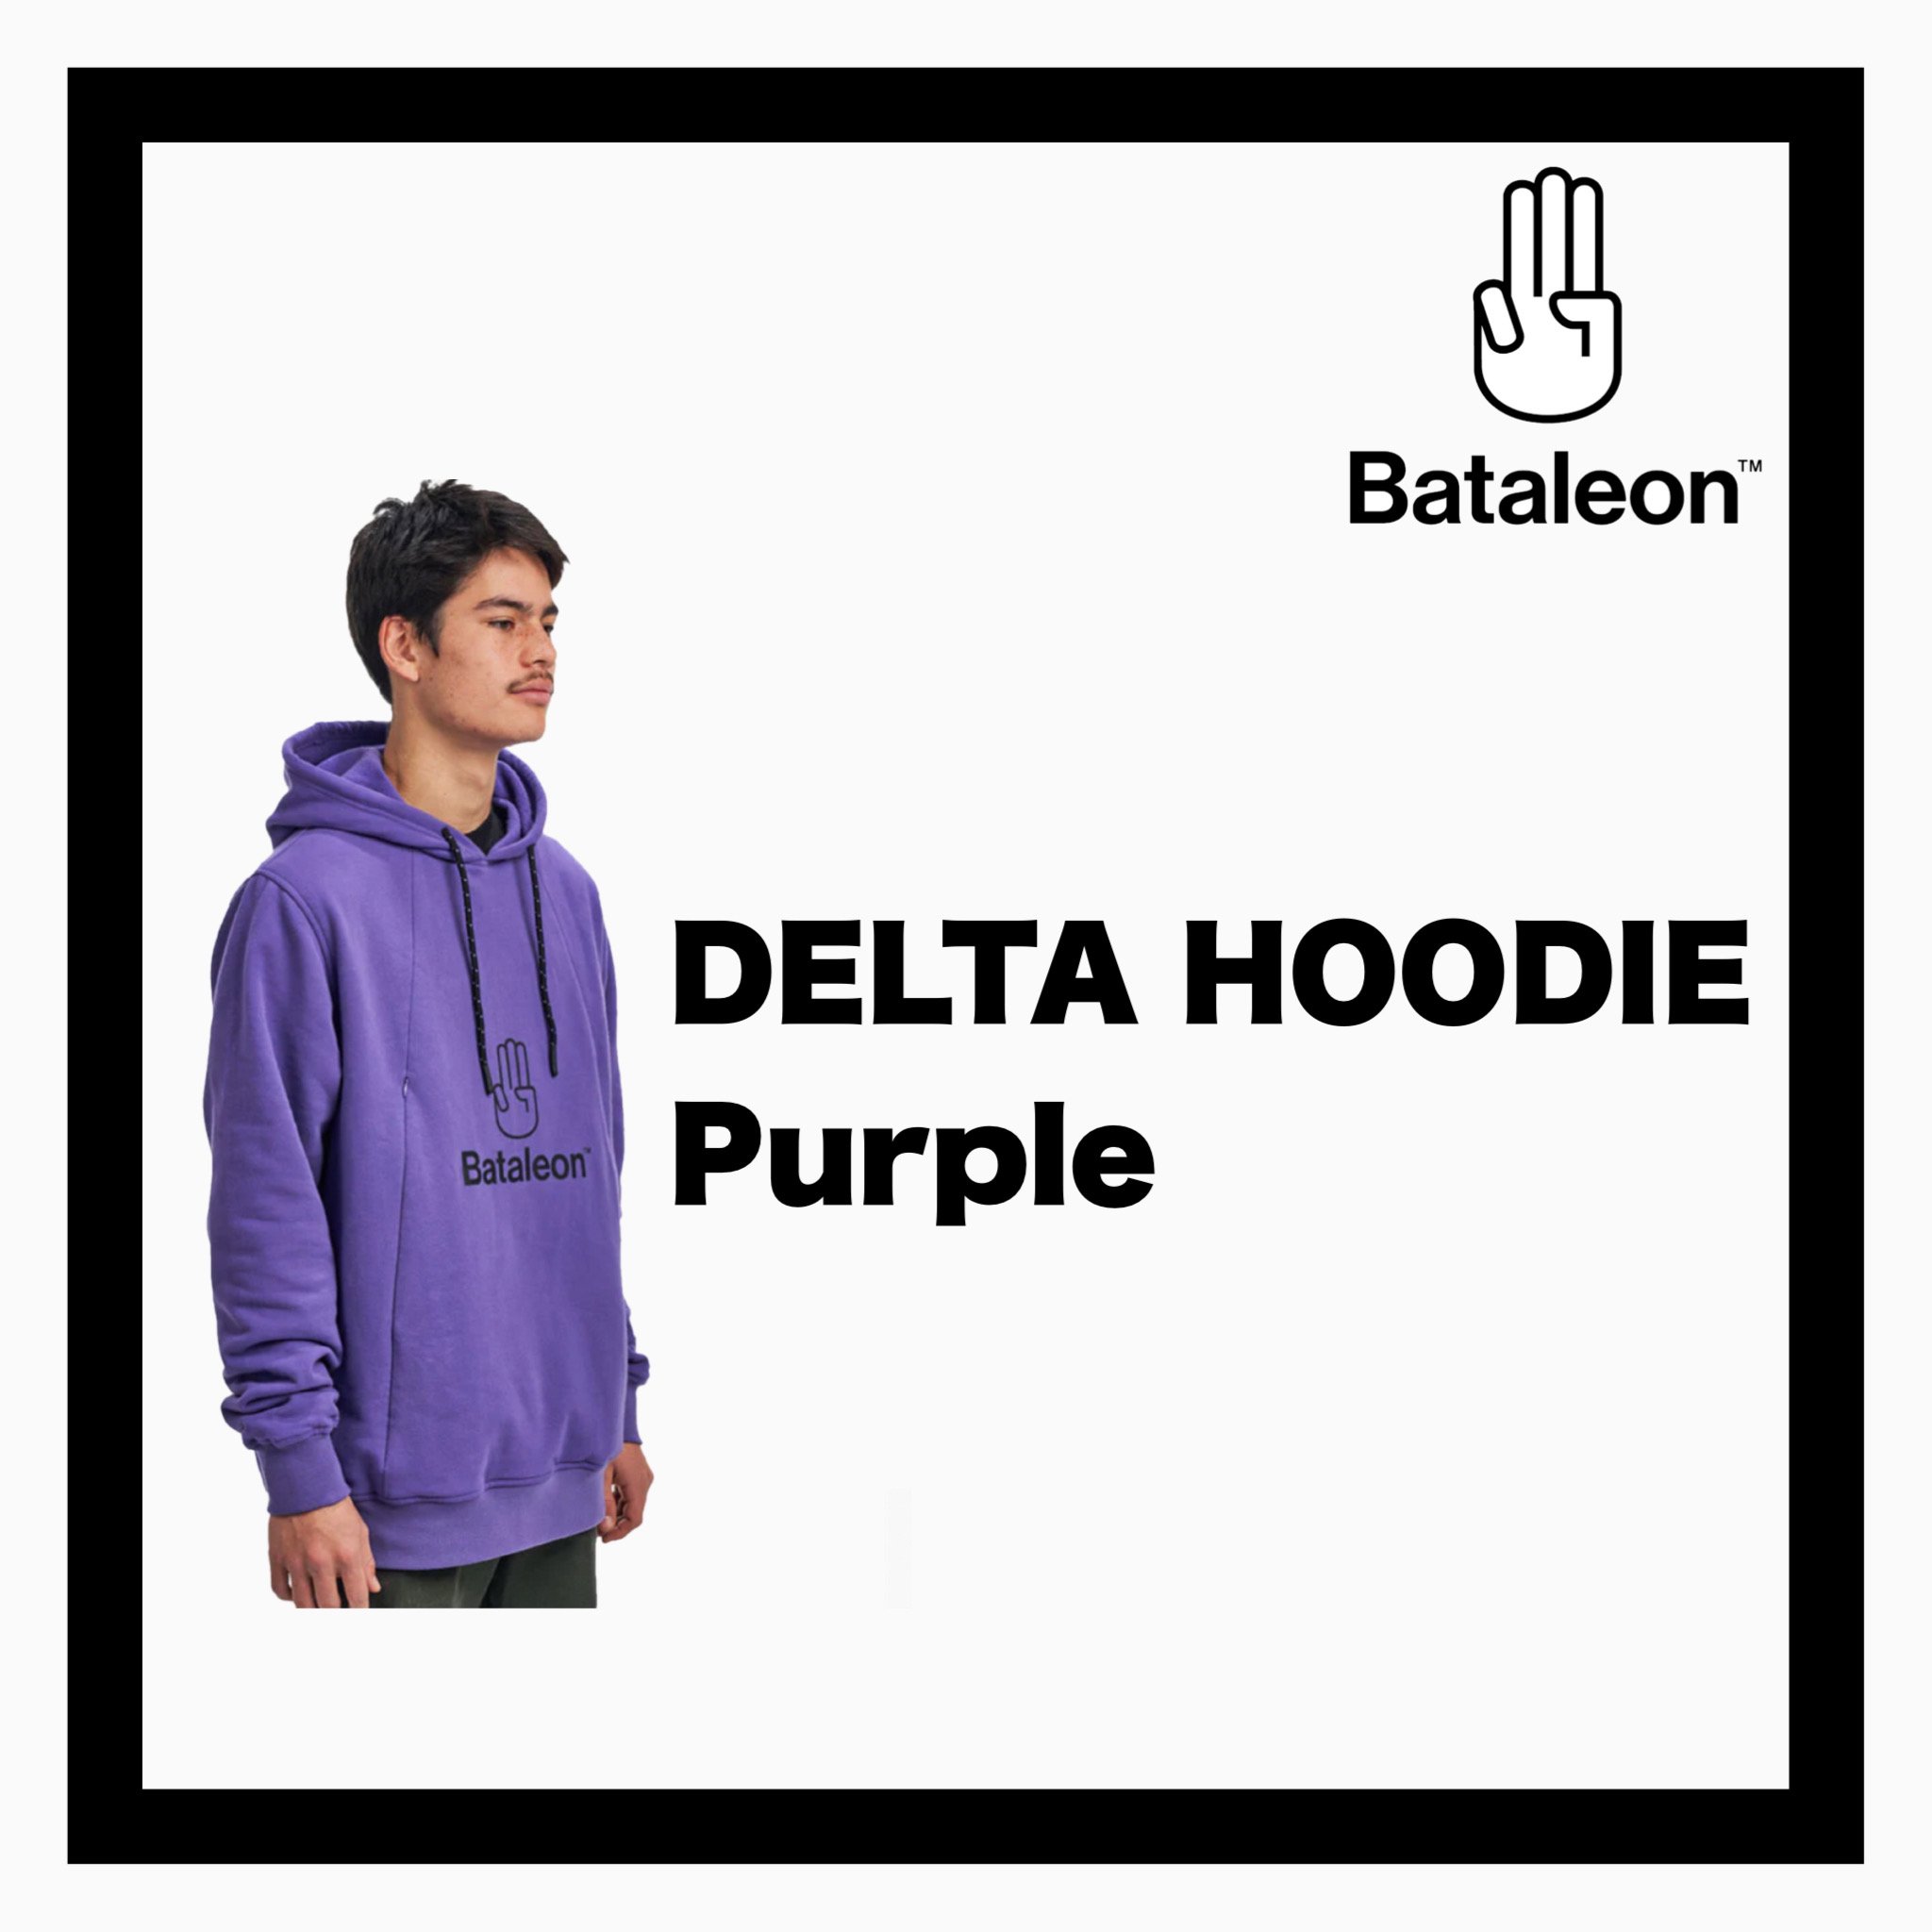 BATALEON Delta Hoodie Purple